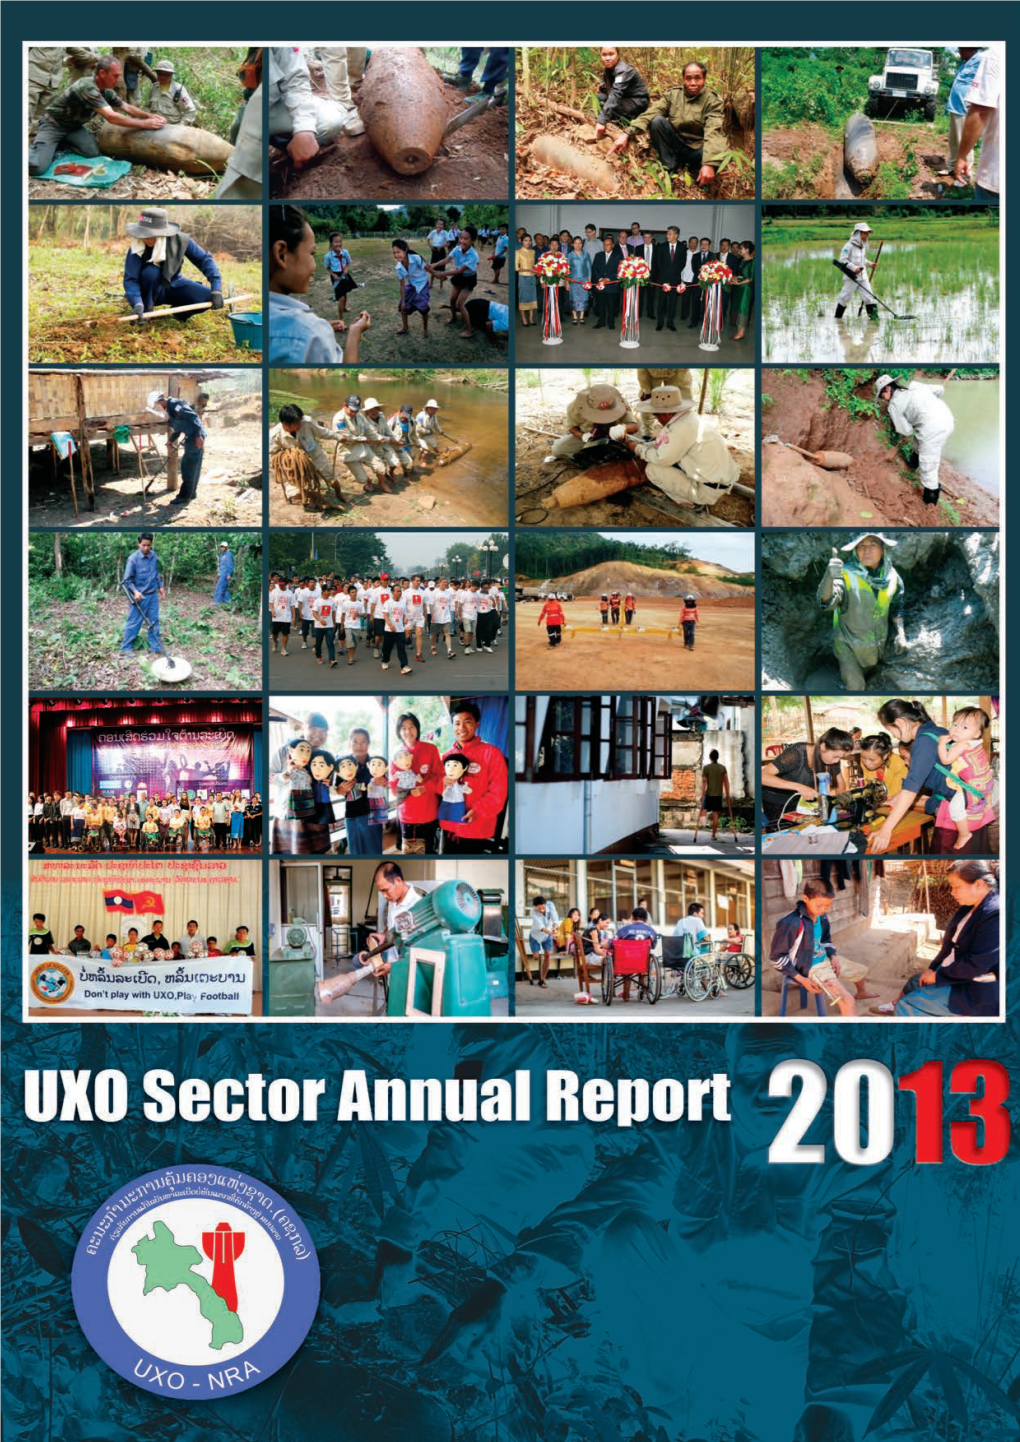 UXO Sector Annual Report 2013